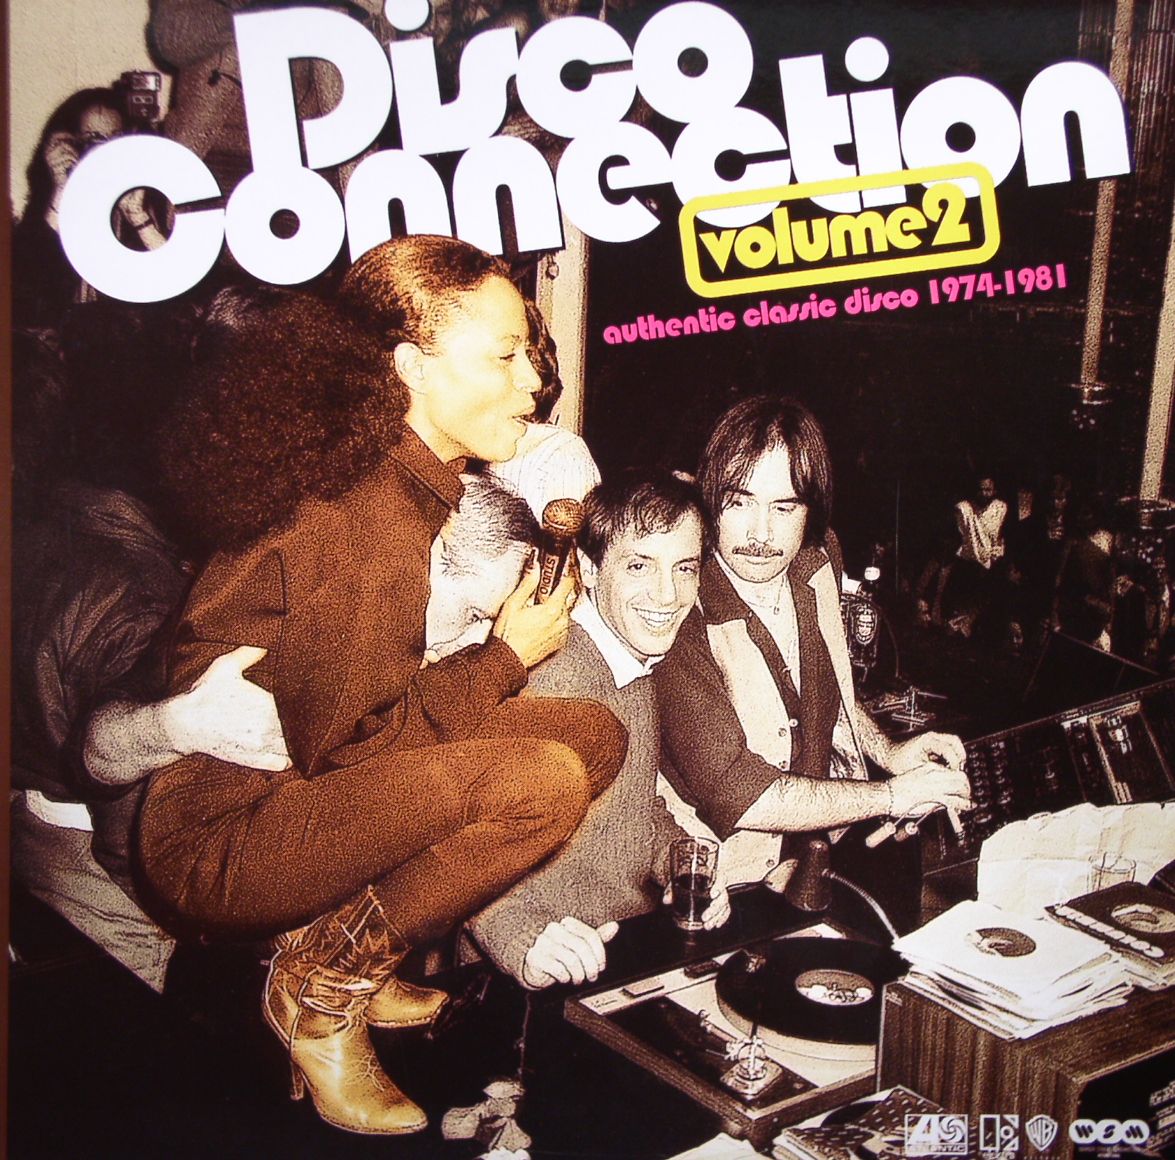 VARIOUS - Disco Connection Volume 2: Authentic Classic Disco 1974-1981